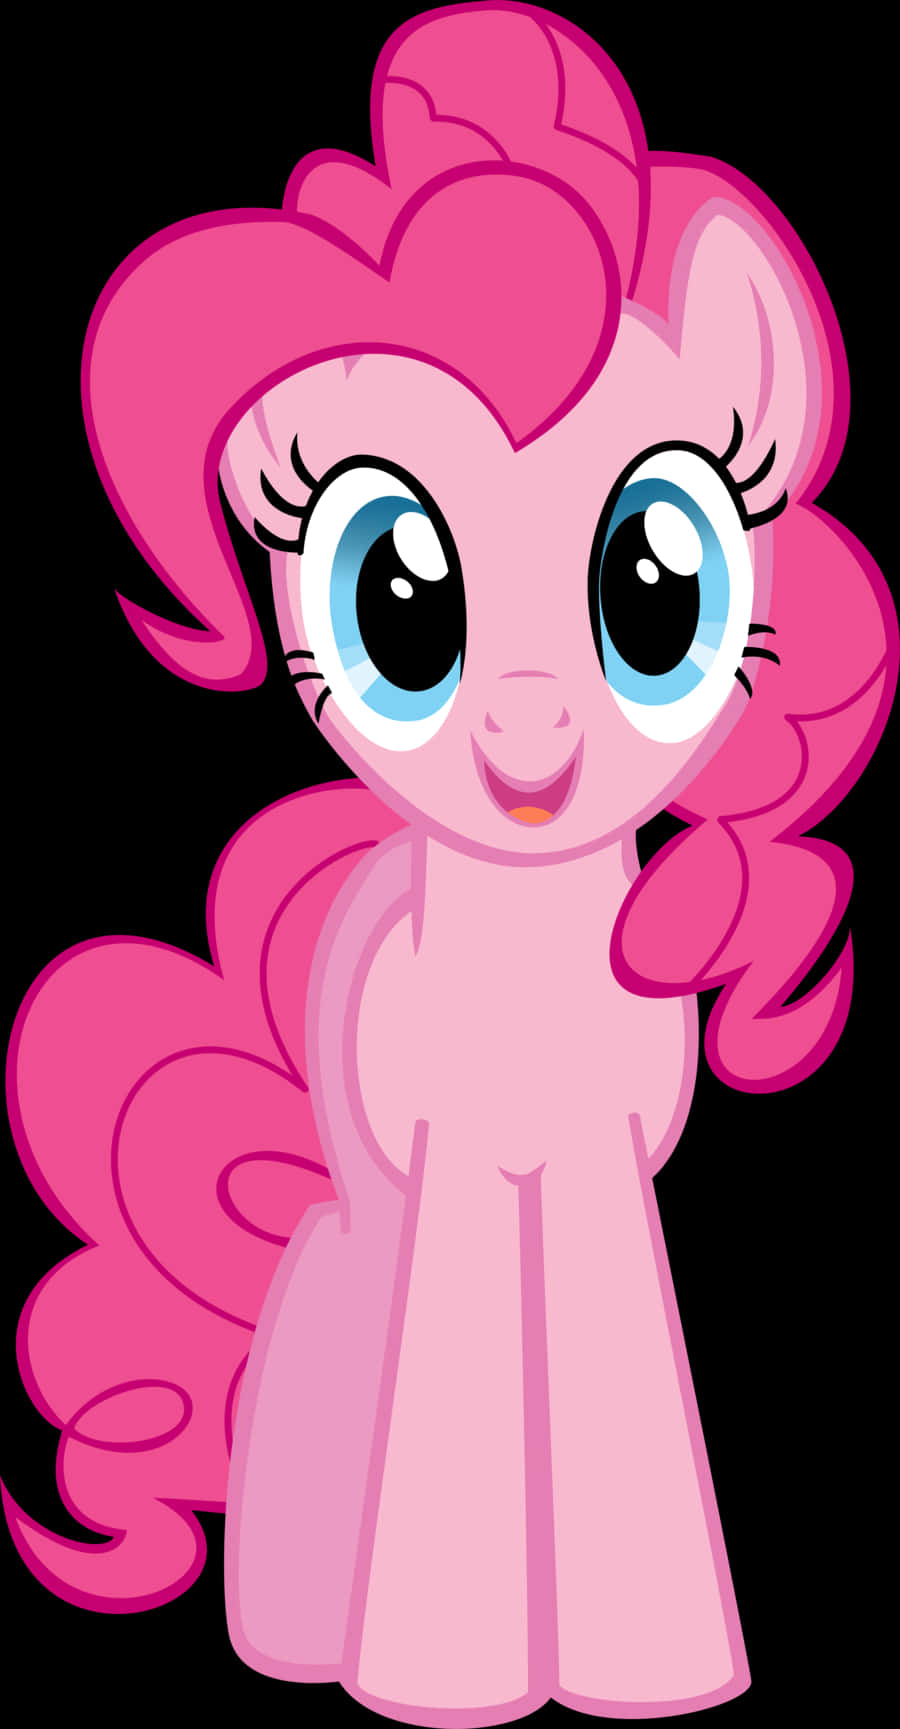 A Cartoon Of A Pink Pony